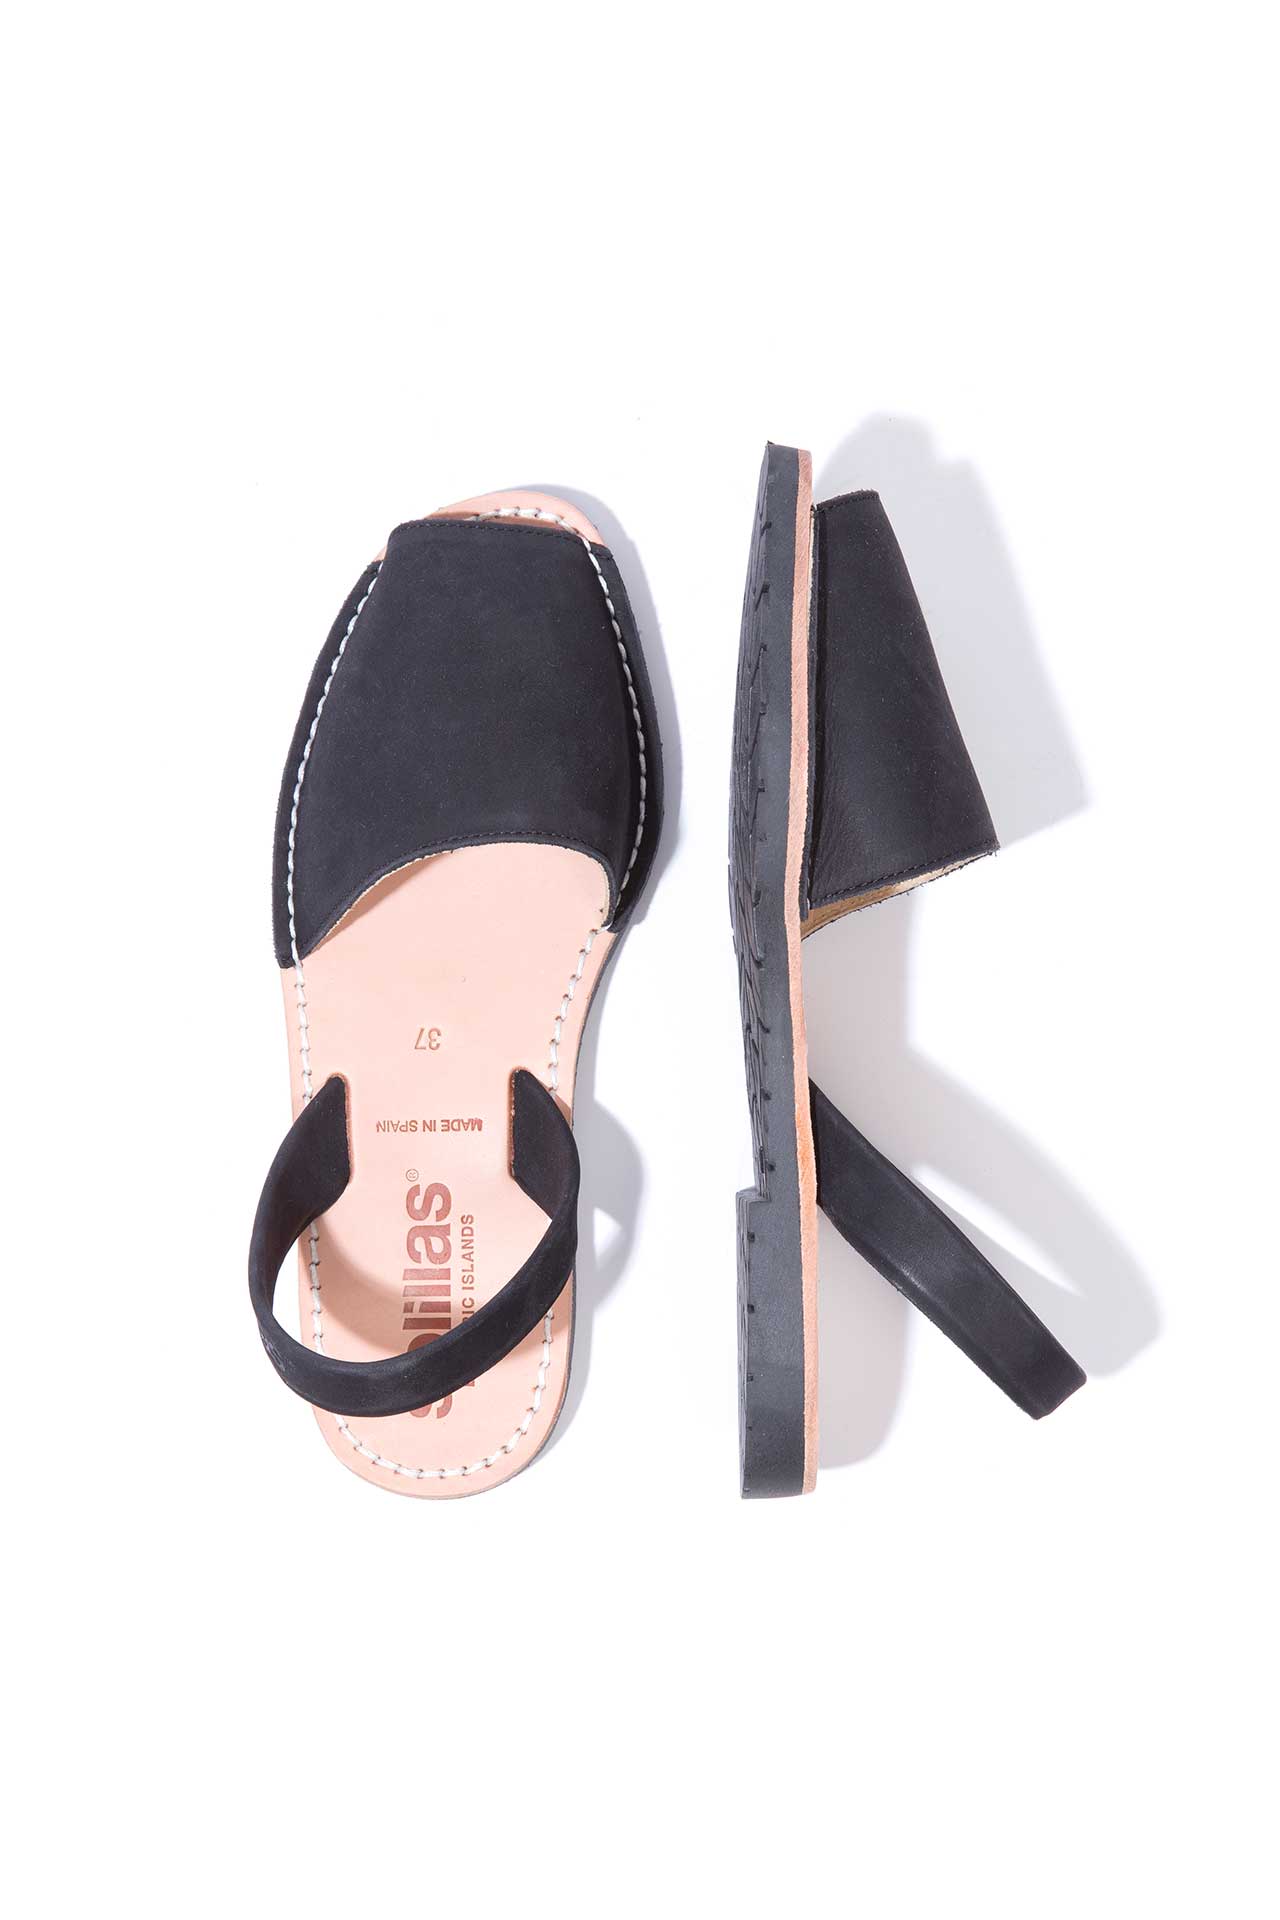 Noche - Black Nubuck Leather Menorcan sandals